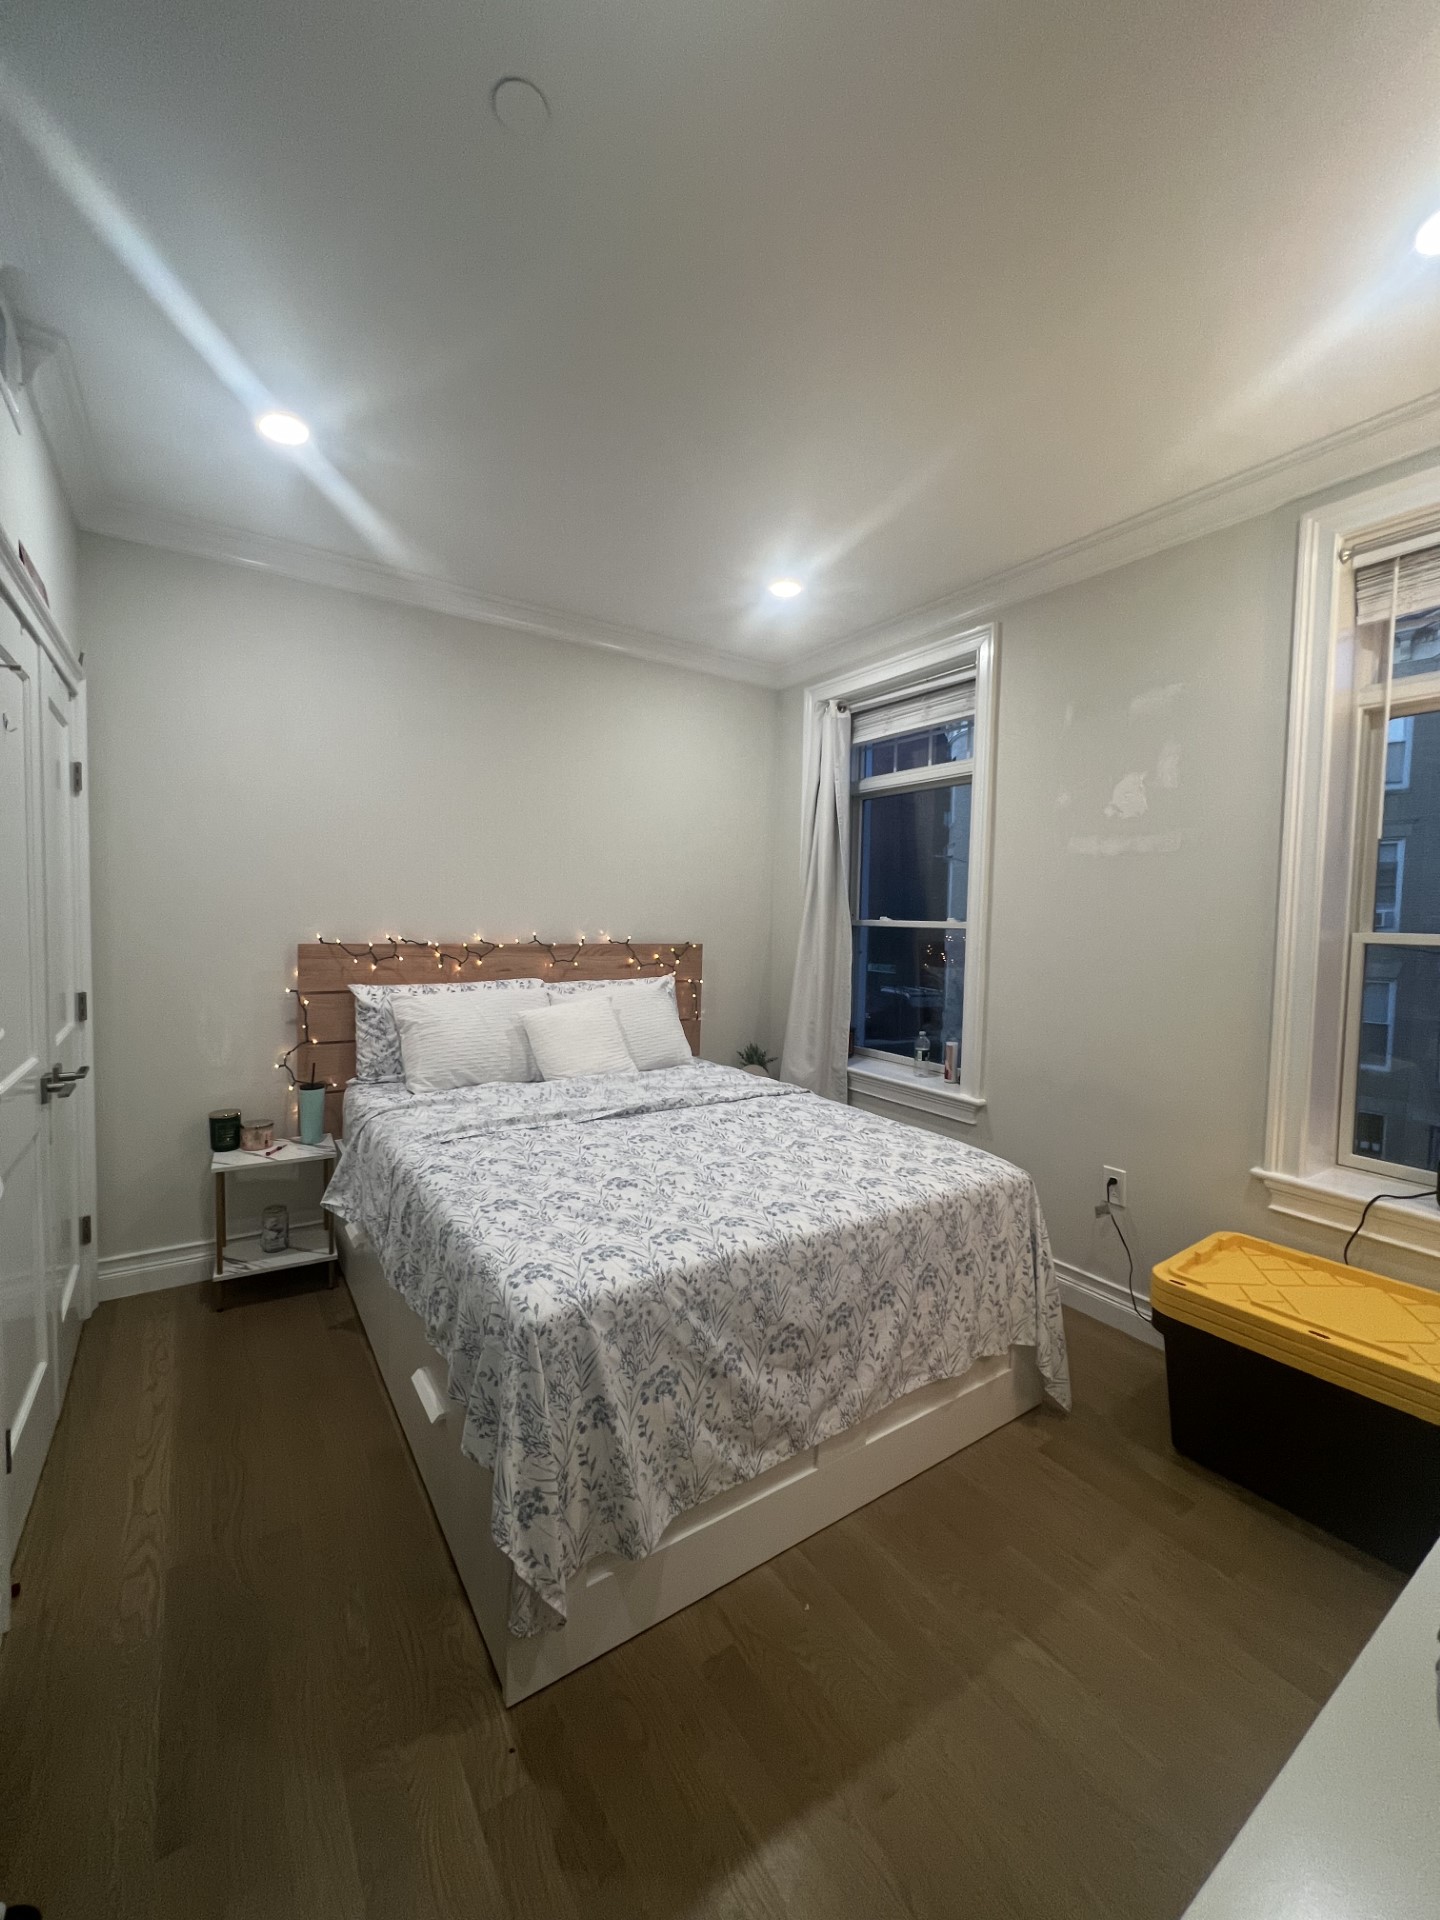 Photos of apartment on Mount Hood Rd.,Boston MA 02135